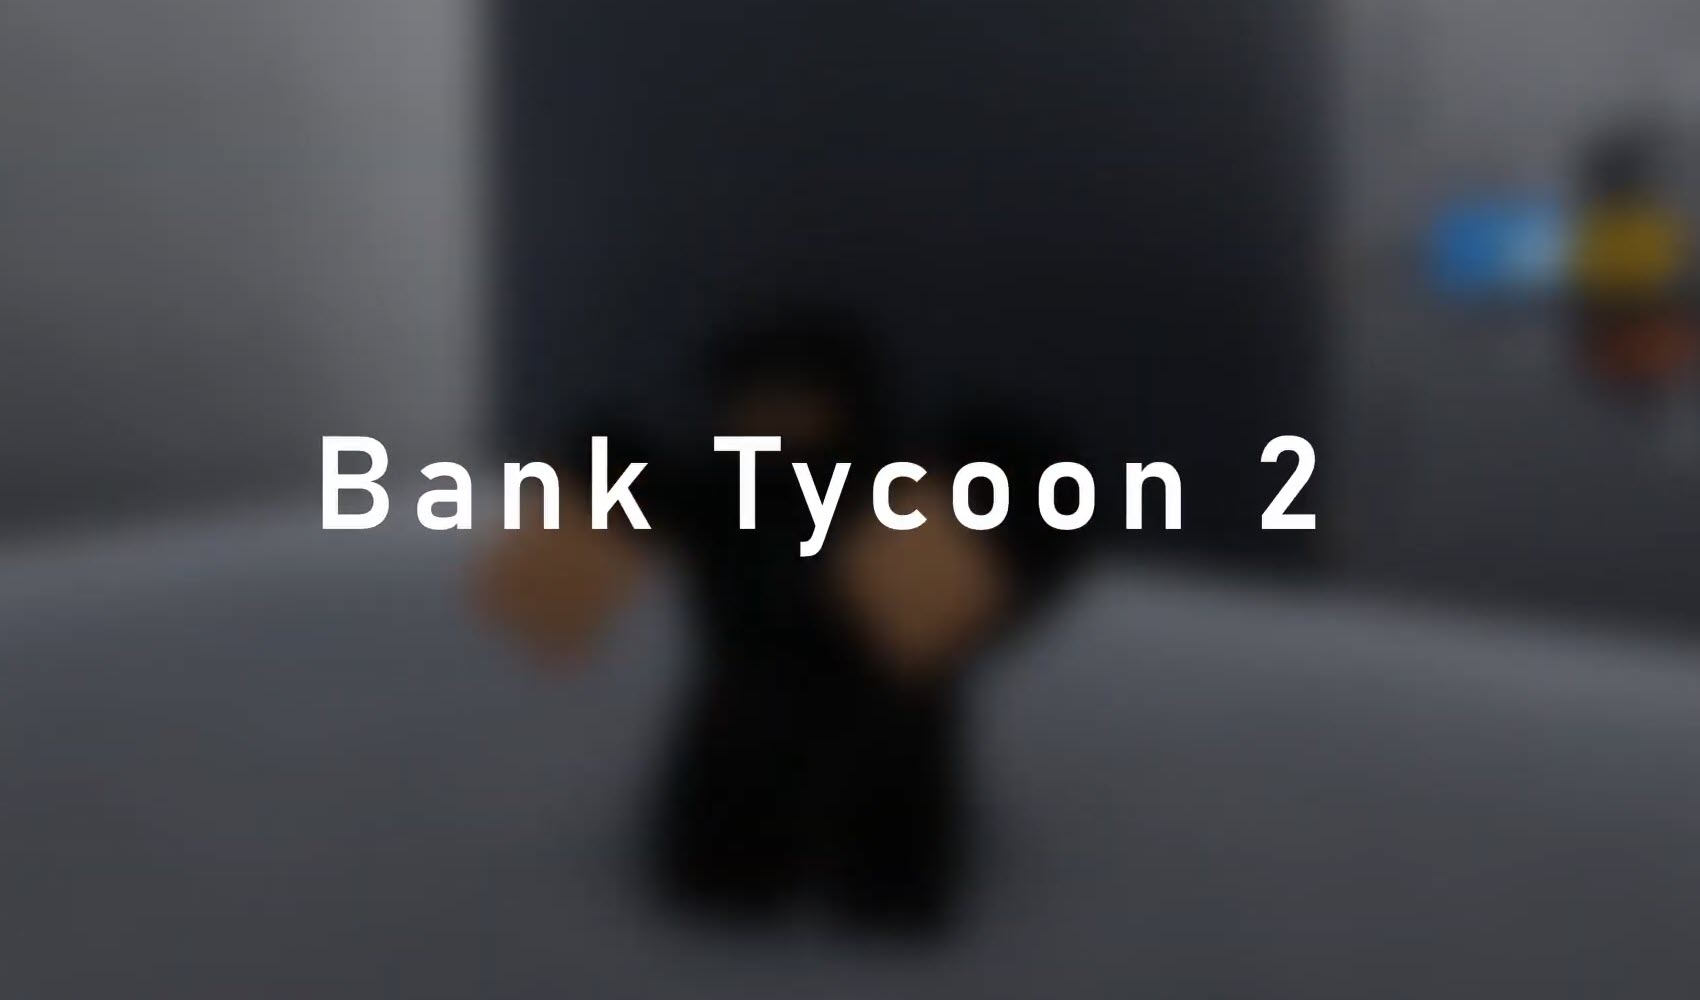 [New] Bank Tycoon 2 Code List